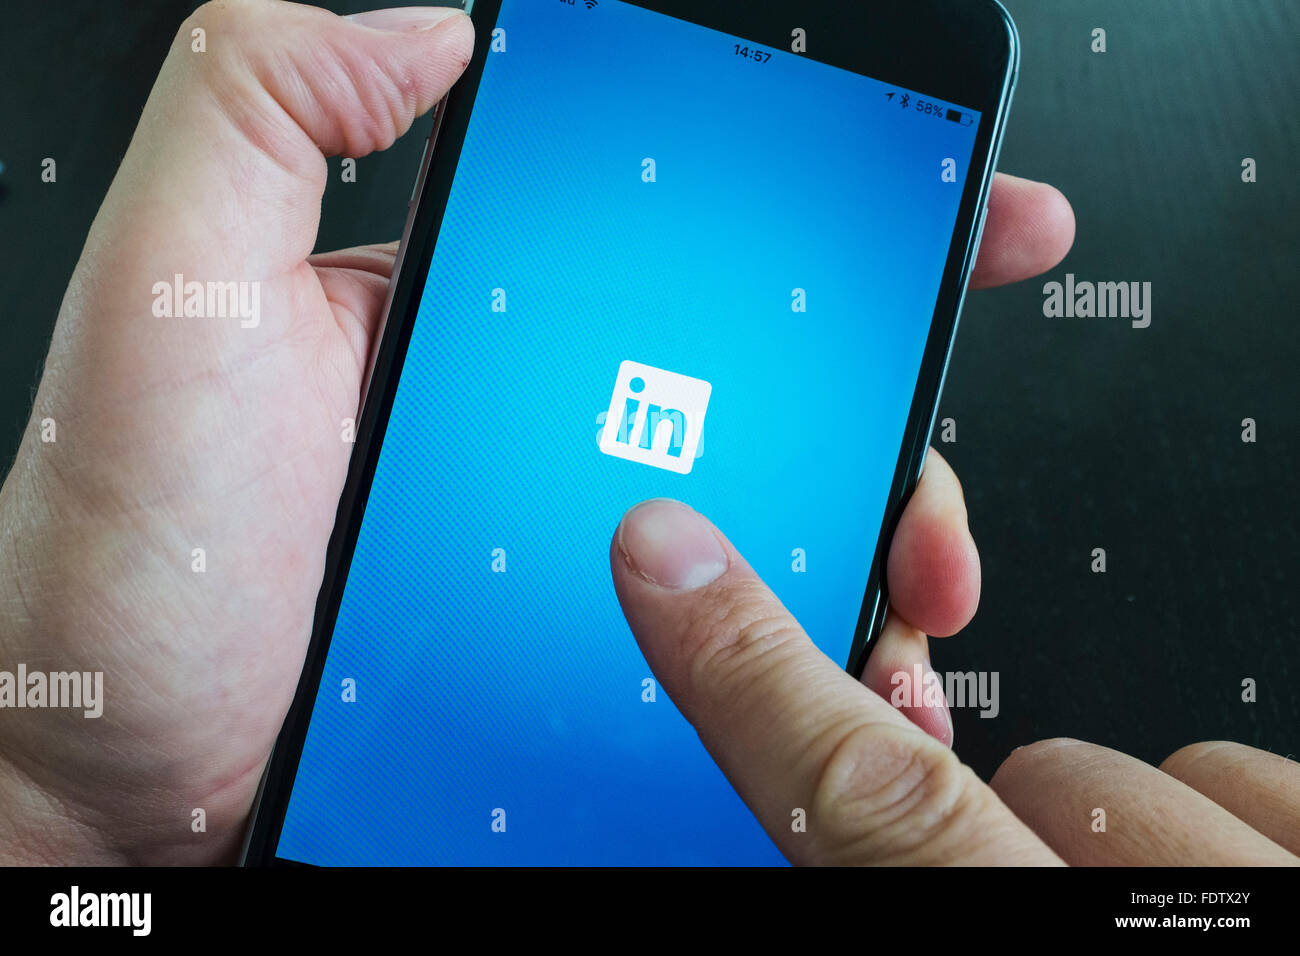 LinkedIn professional social networking app logo on screen of iPhone 6 Plus smart phone Stock Photo